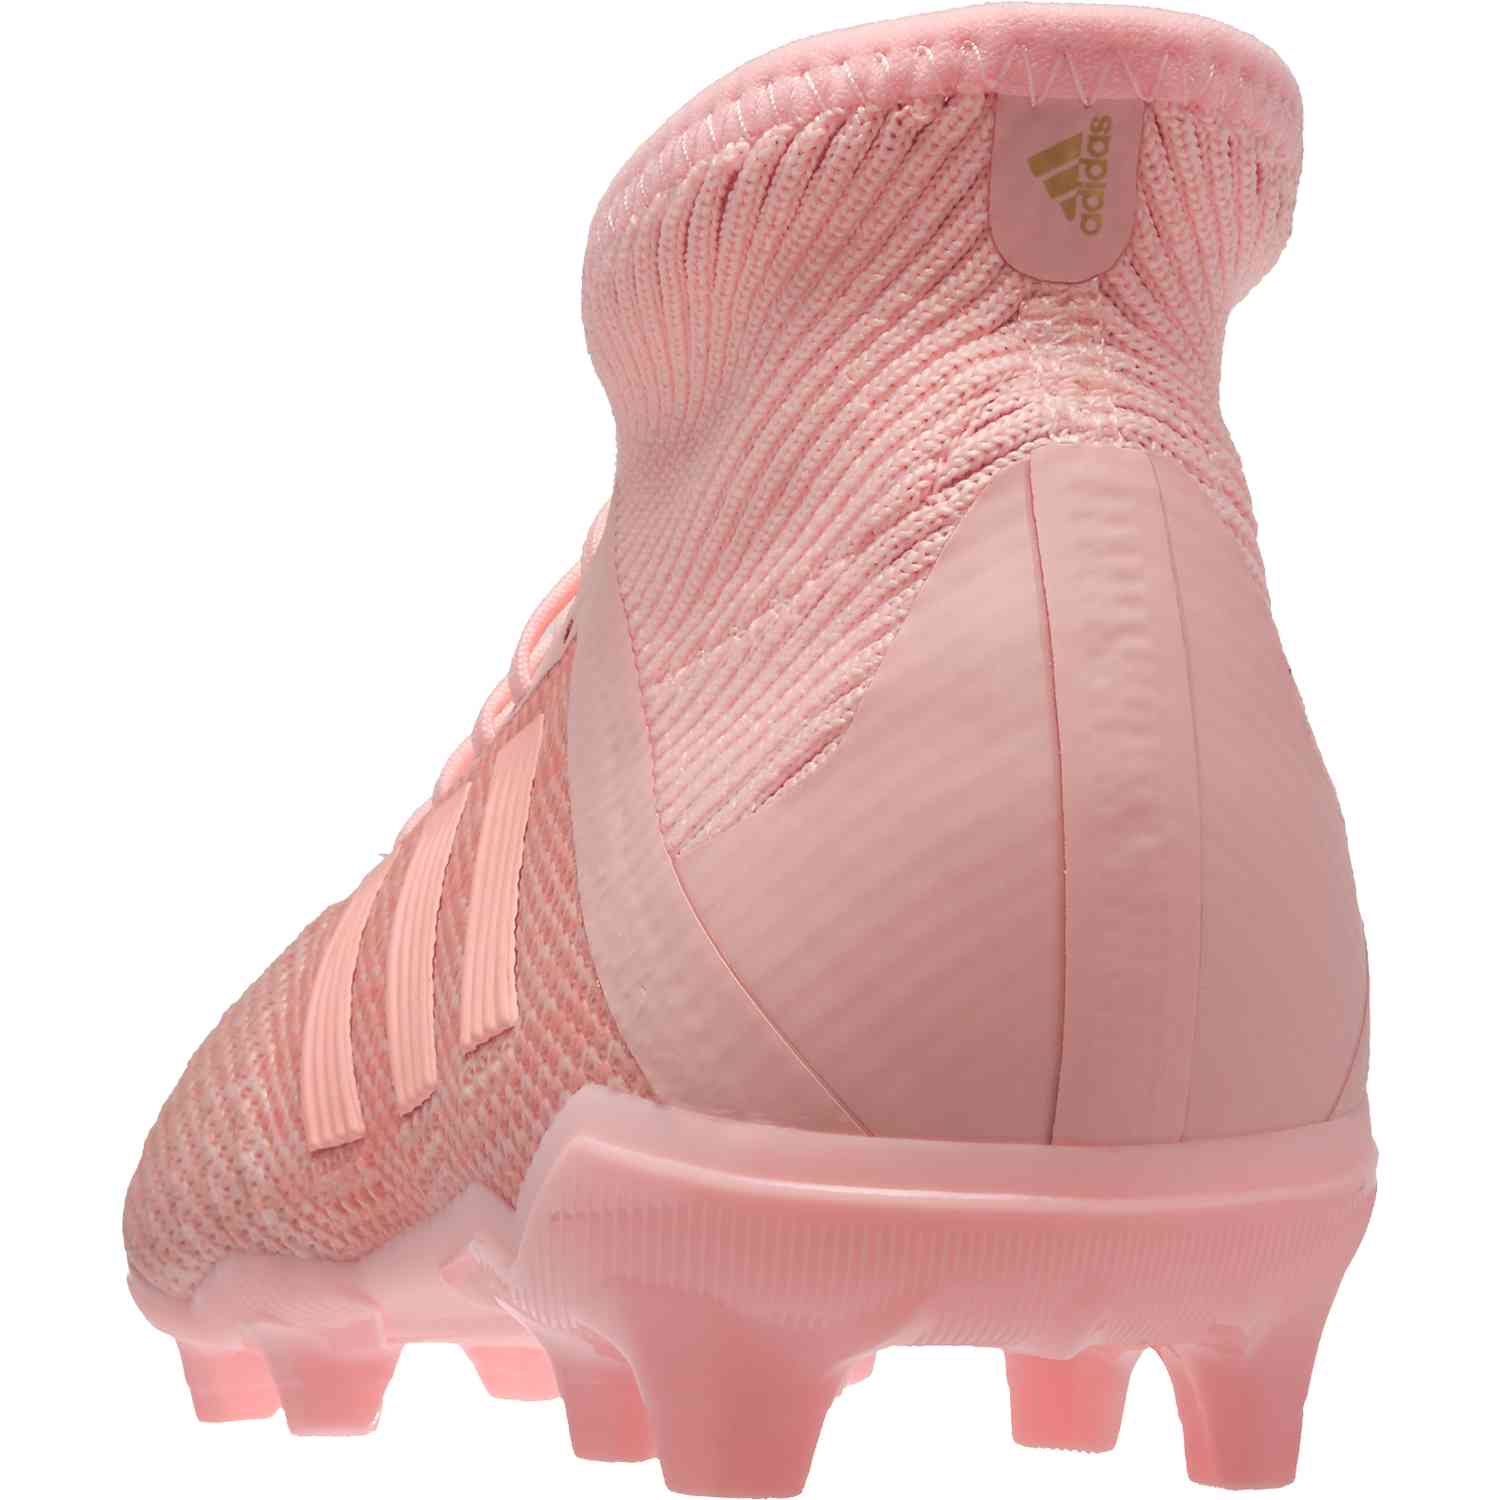 adidas predator 18.1 trace pink